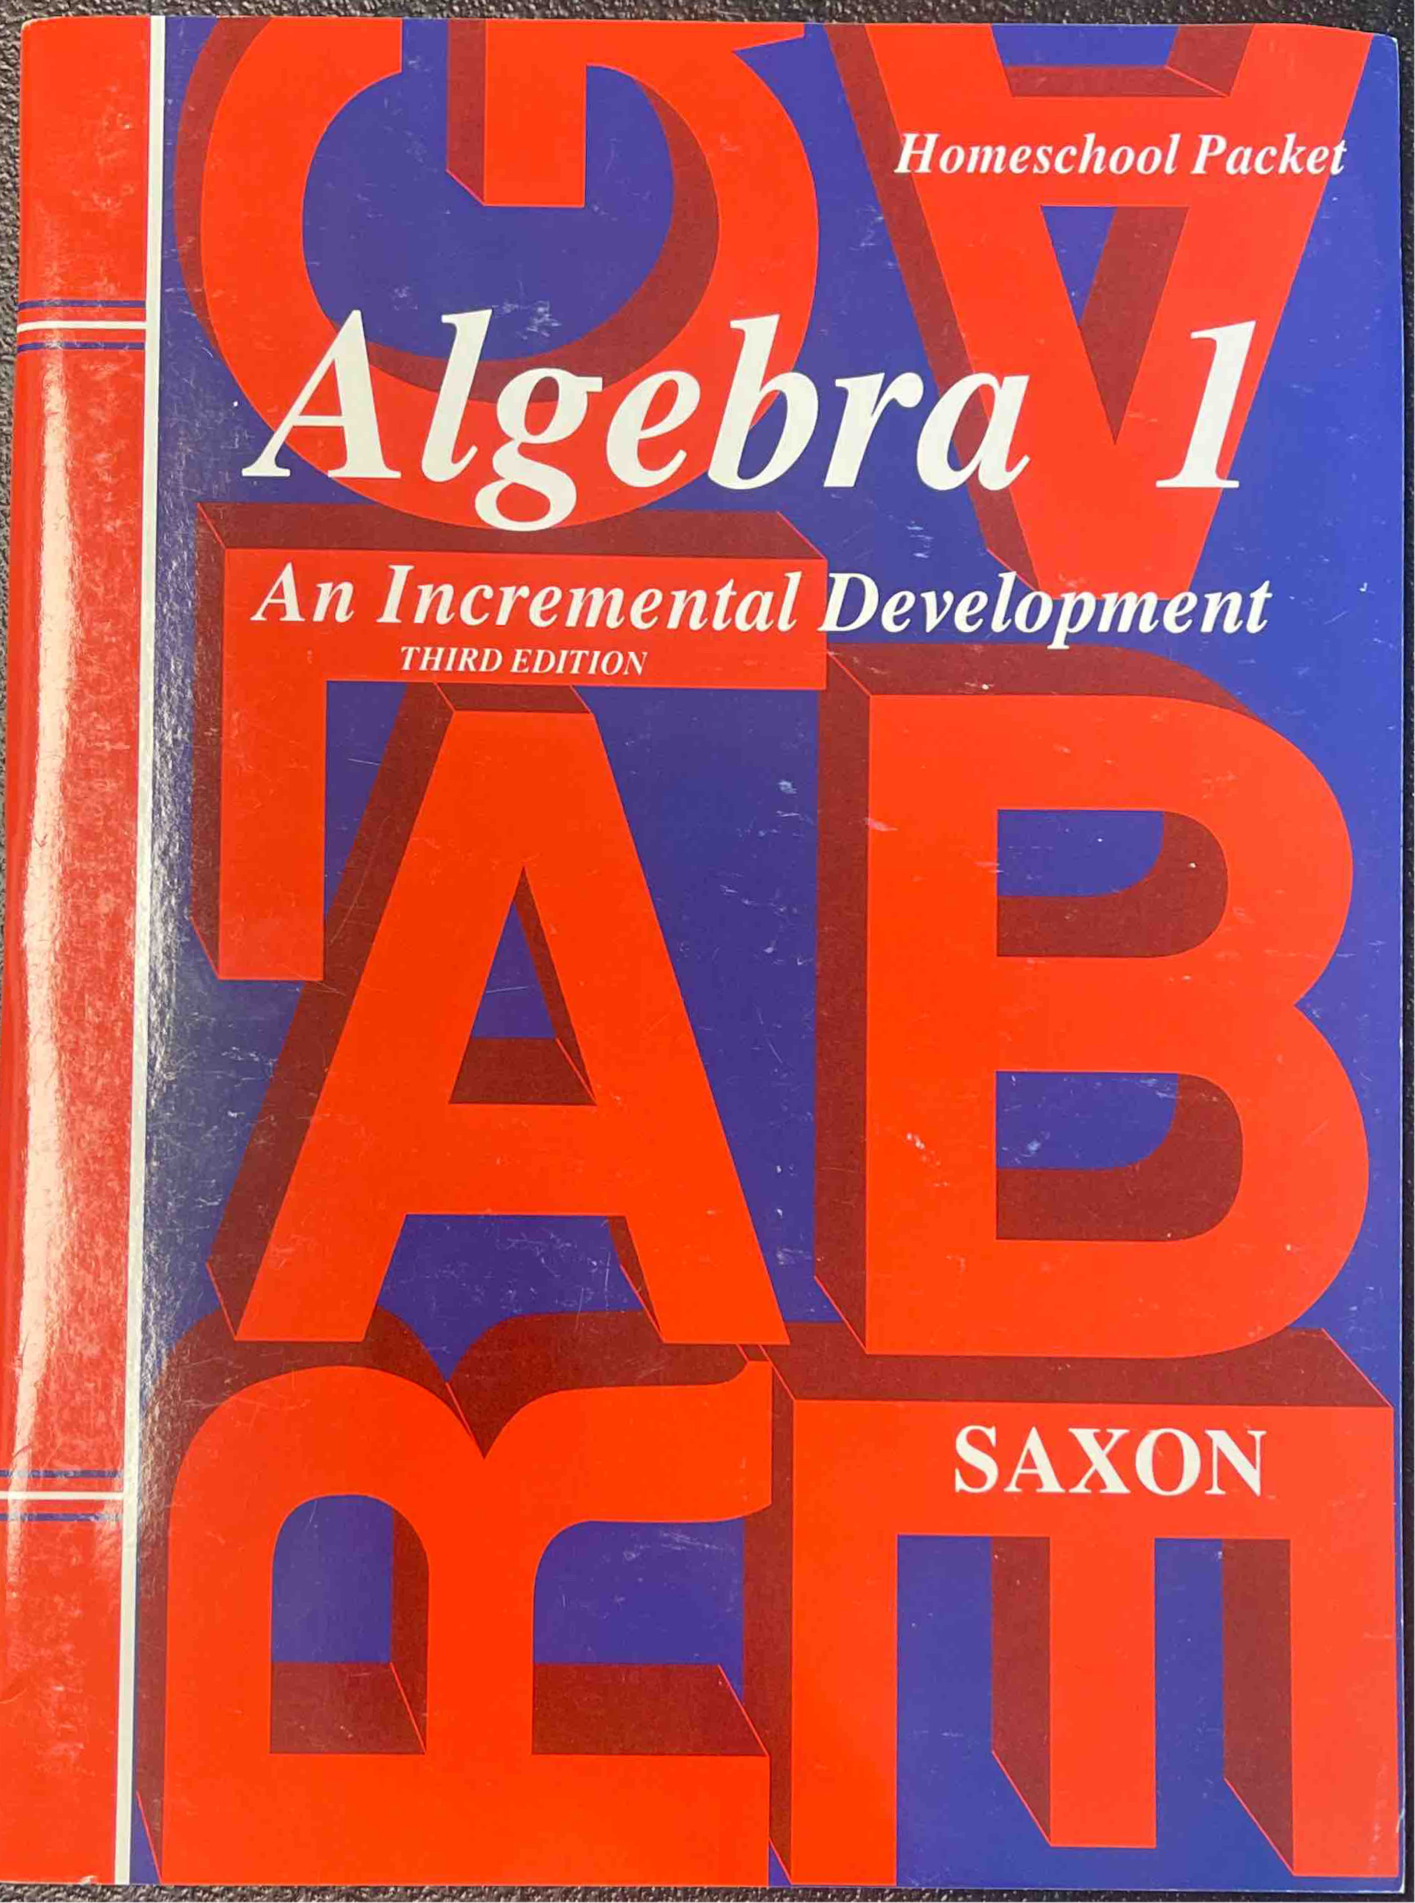 Algebra 1-  An Incremental Development, Third Edition - Solutions Manual